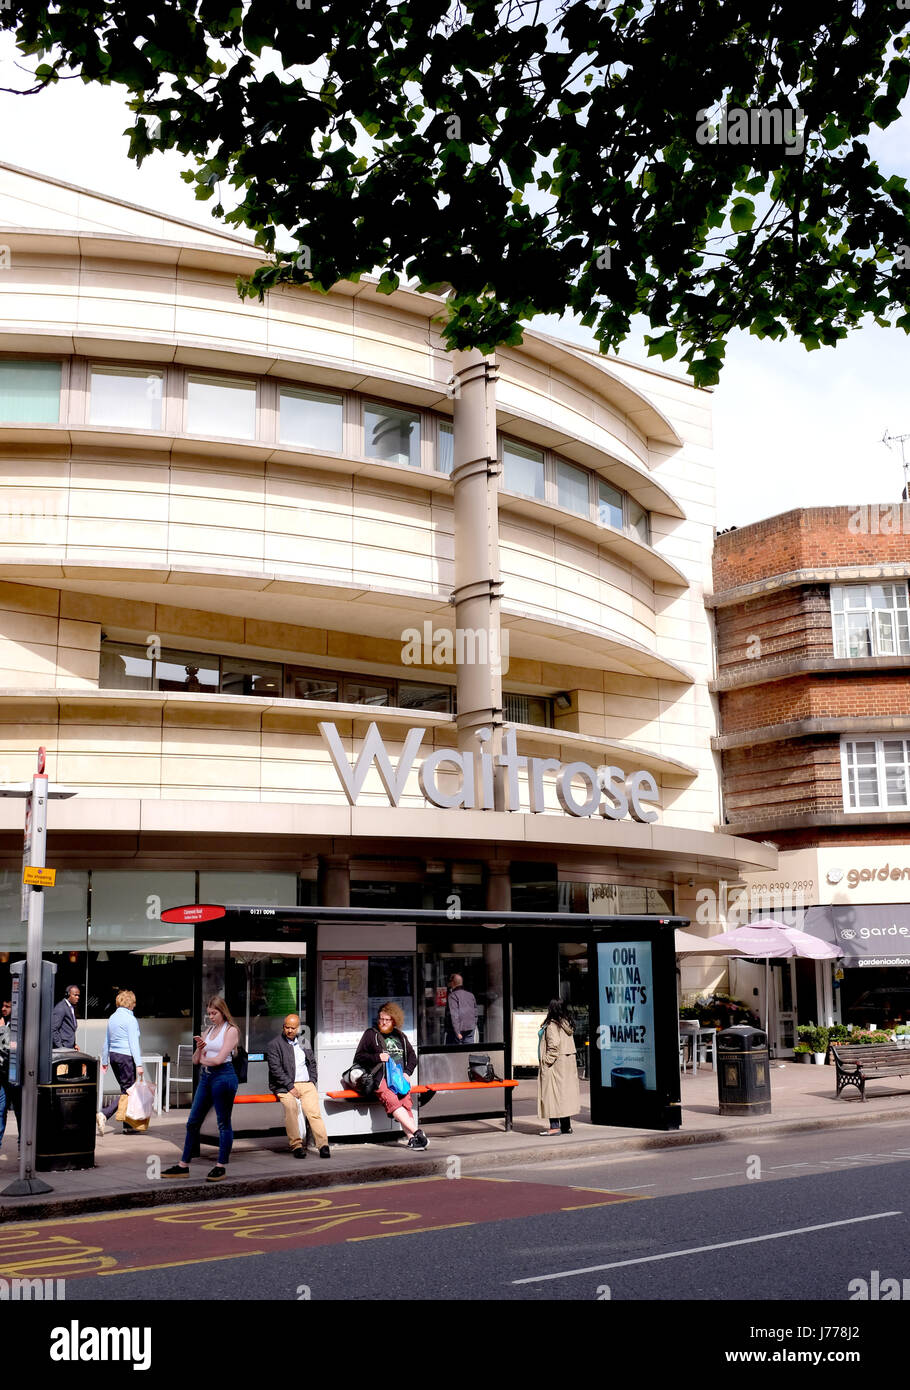 Waitrose supermarket in Surbiton South West London UK -  Surbiton is a suburban area of south-west London Stock Photo